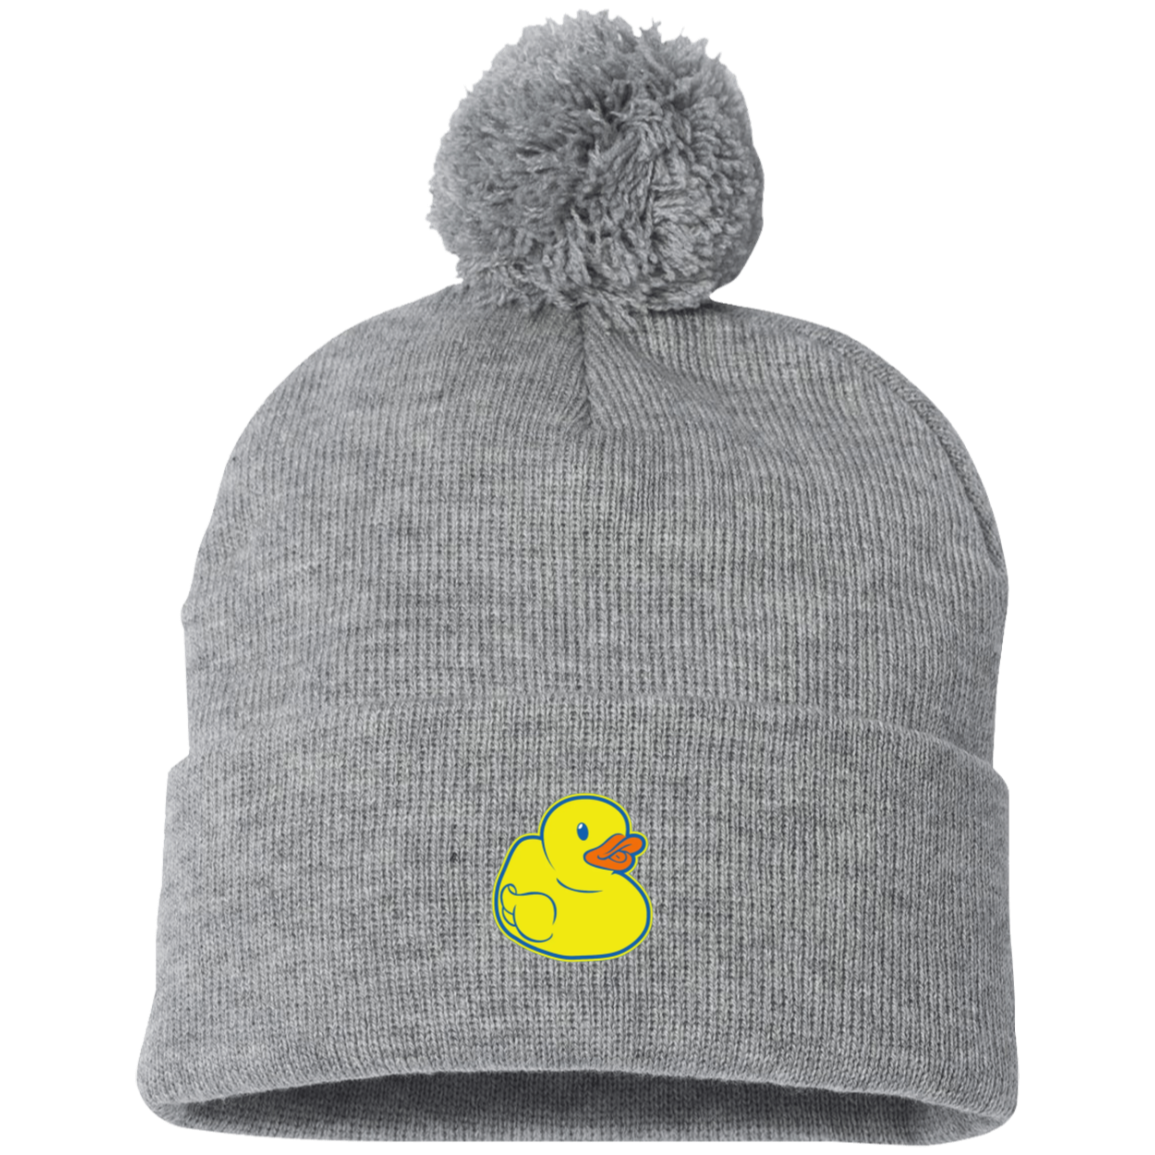 Ducks Embroidered Pom Pom Knit Cap